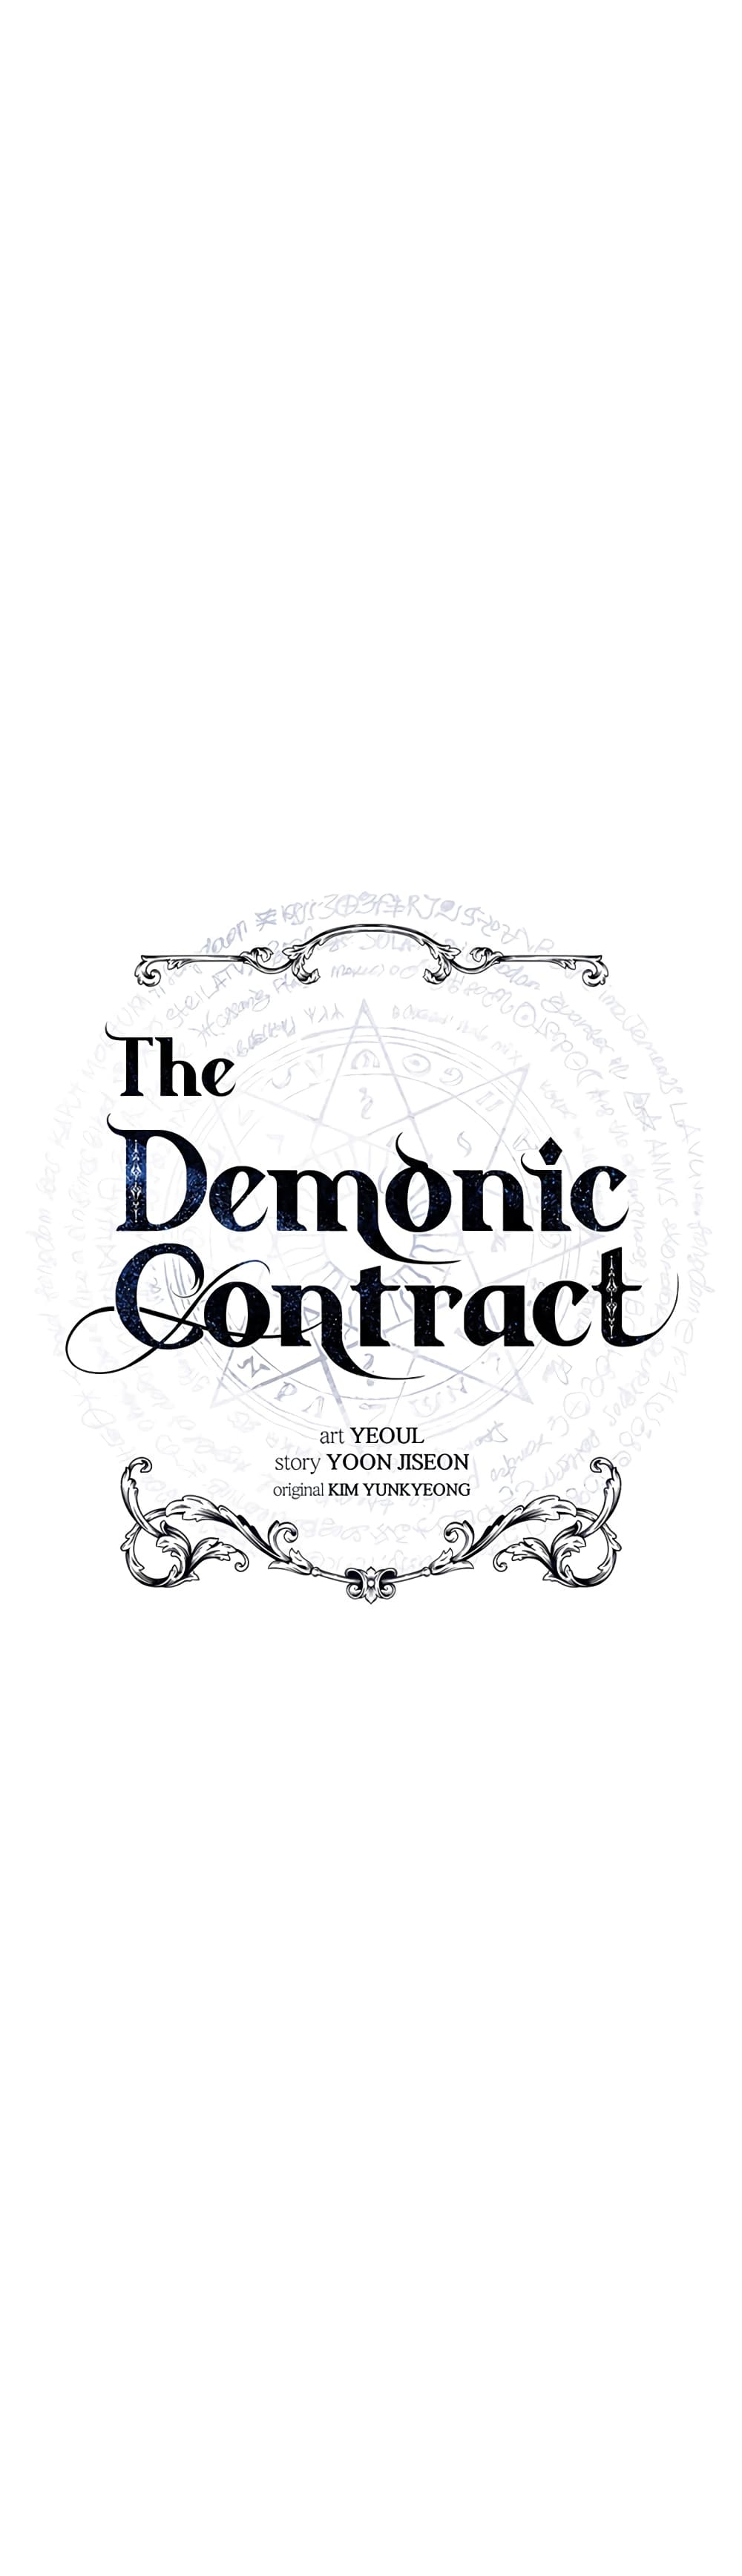 The Demonic Contract 42 (3)